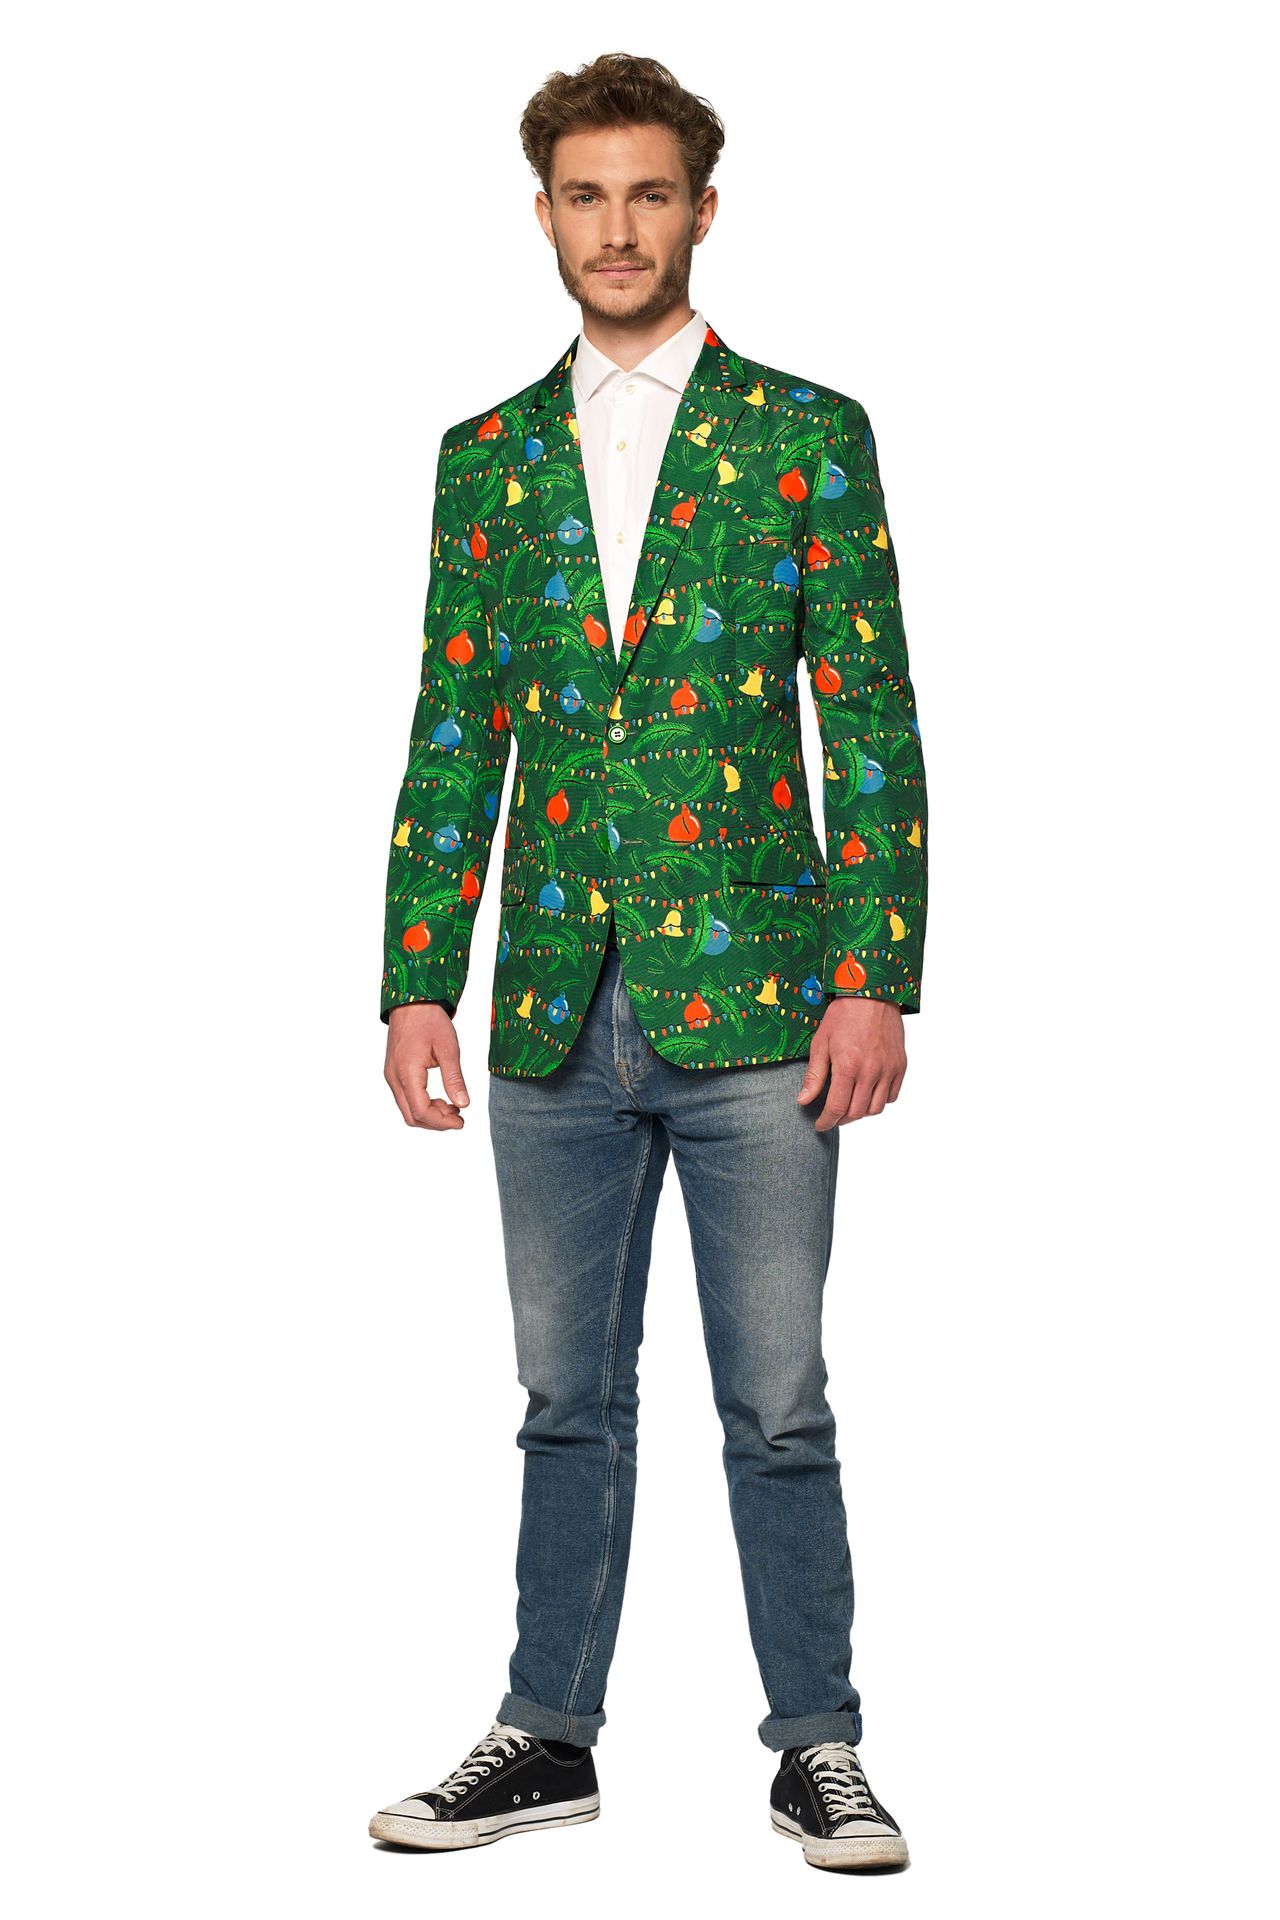 Suitmeister Christmas Green Tree Light Up blazer